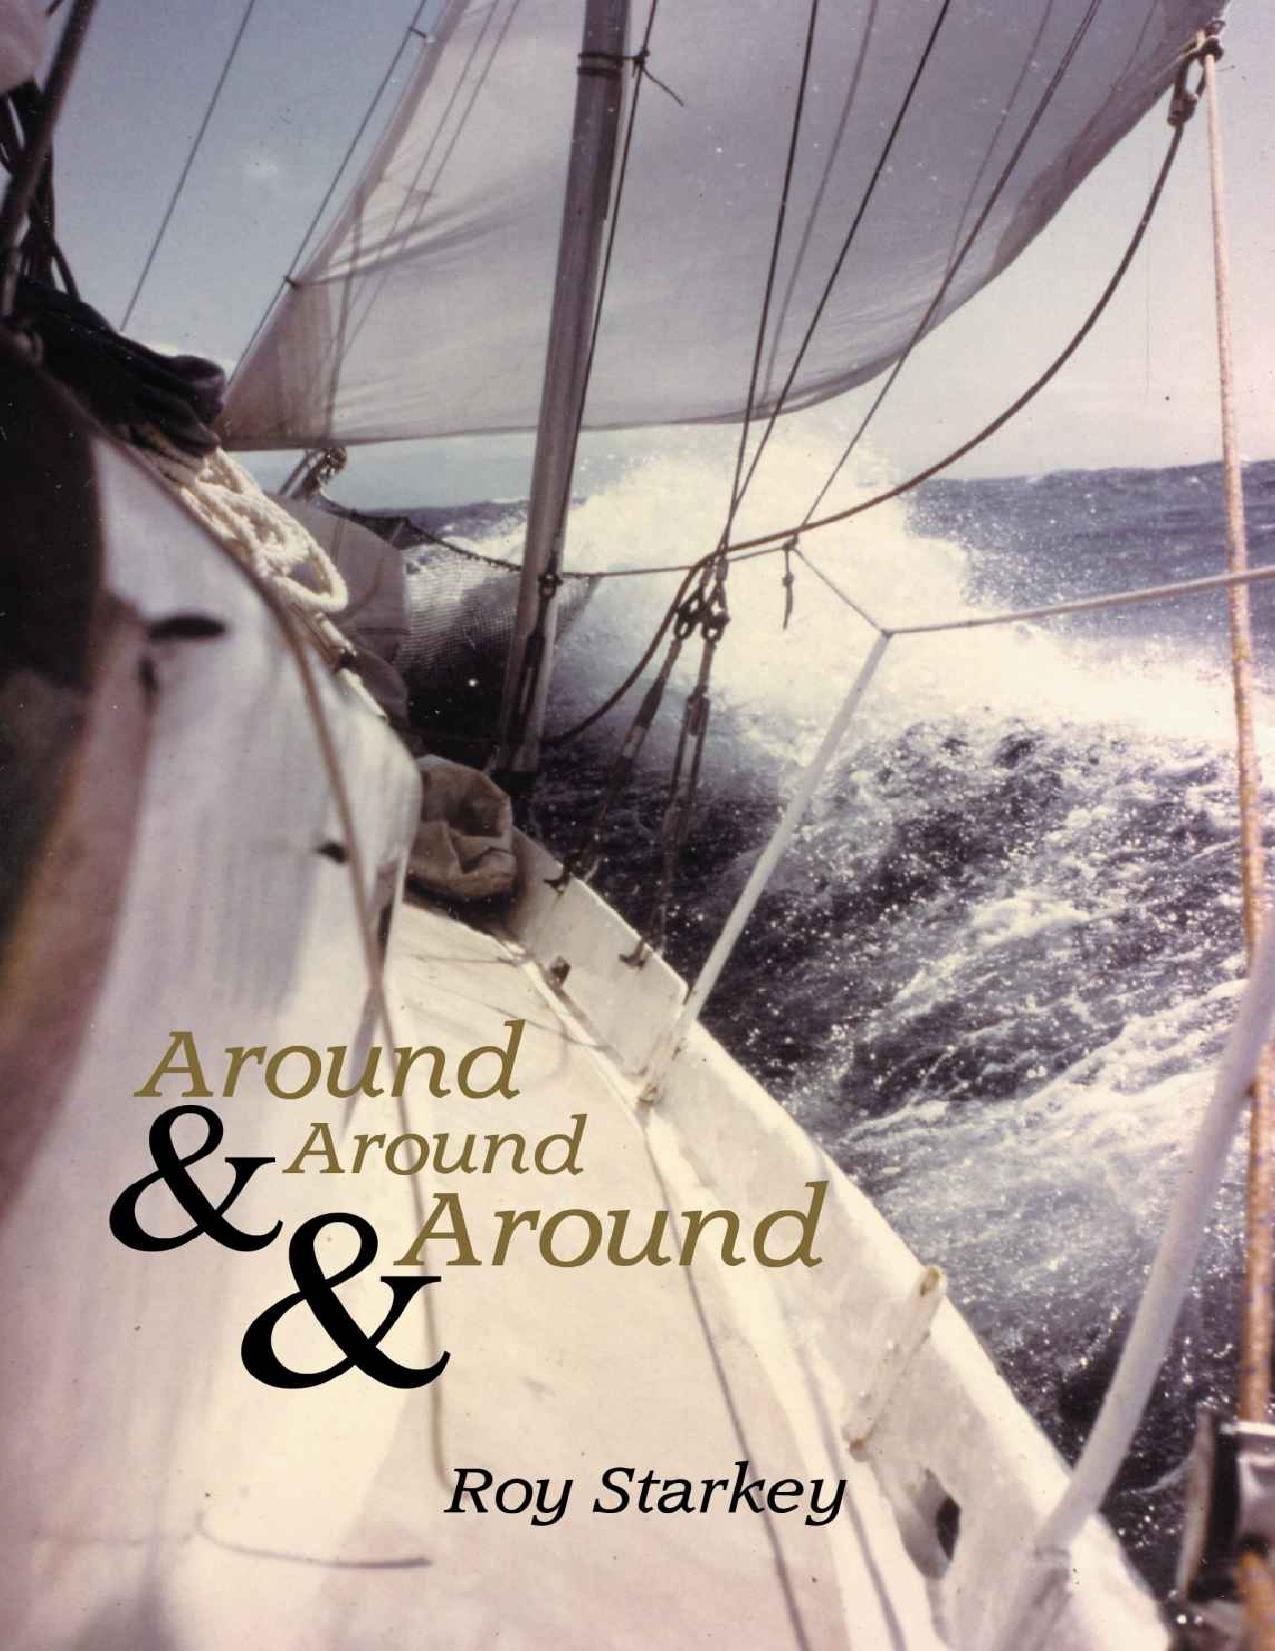 Around & Around & Around by Roy Starkey